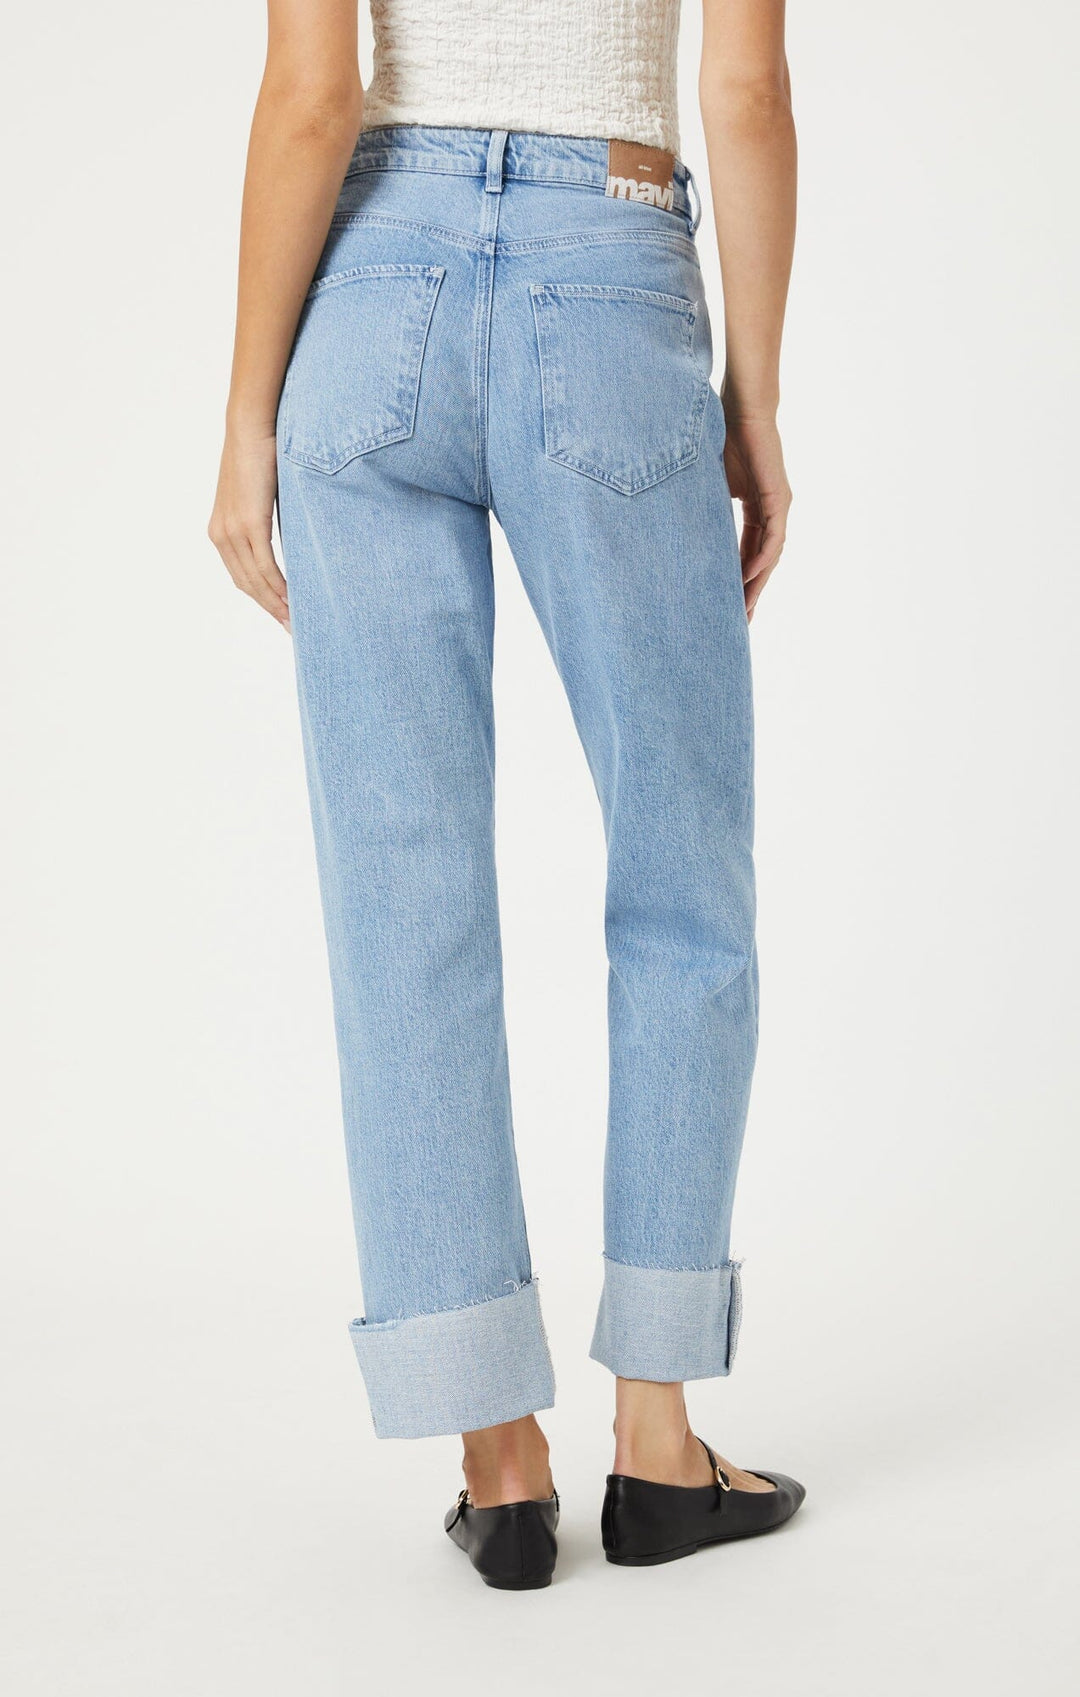 Mavi Savannah Cuffed Light Denim Jeans